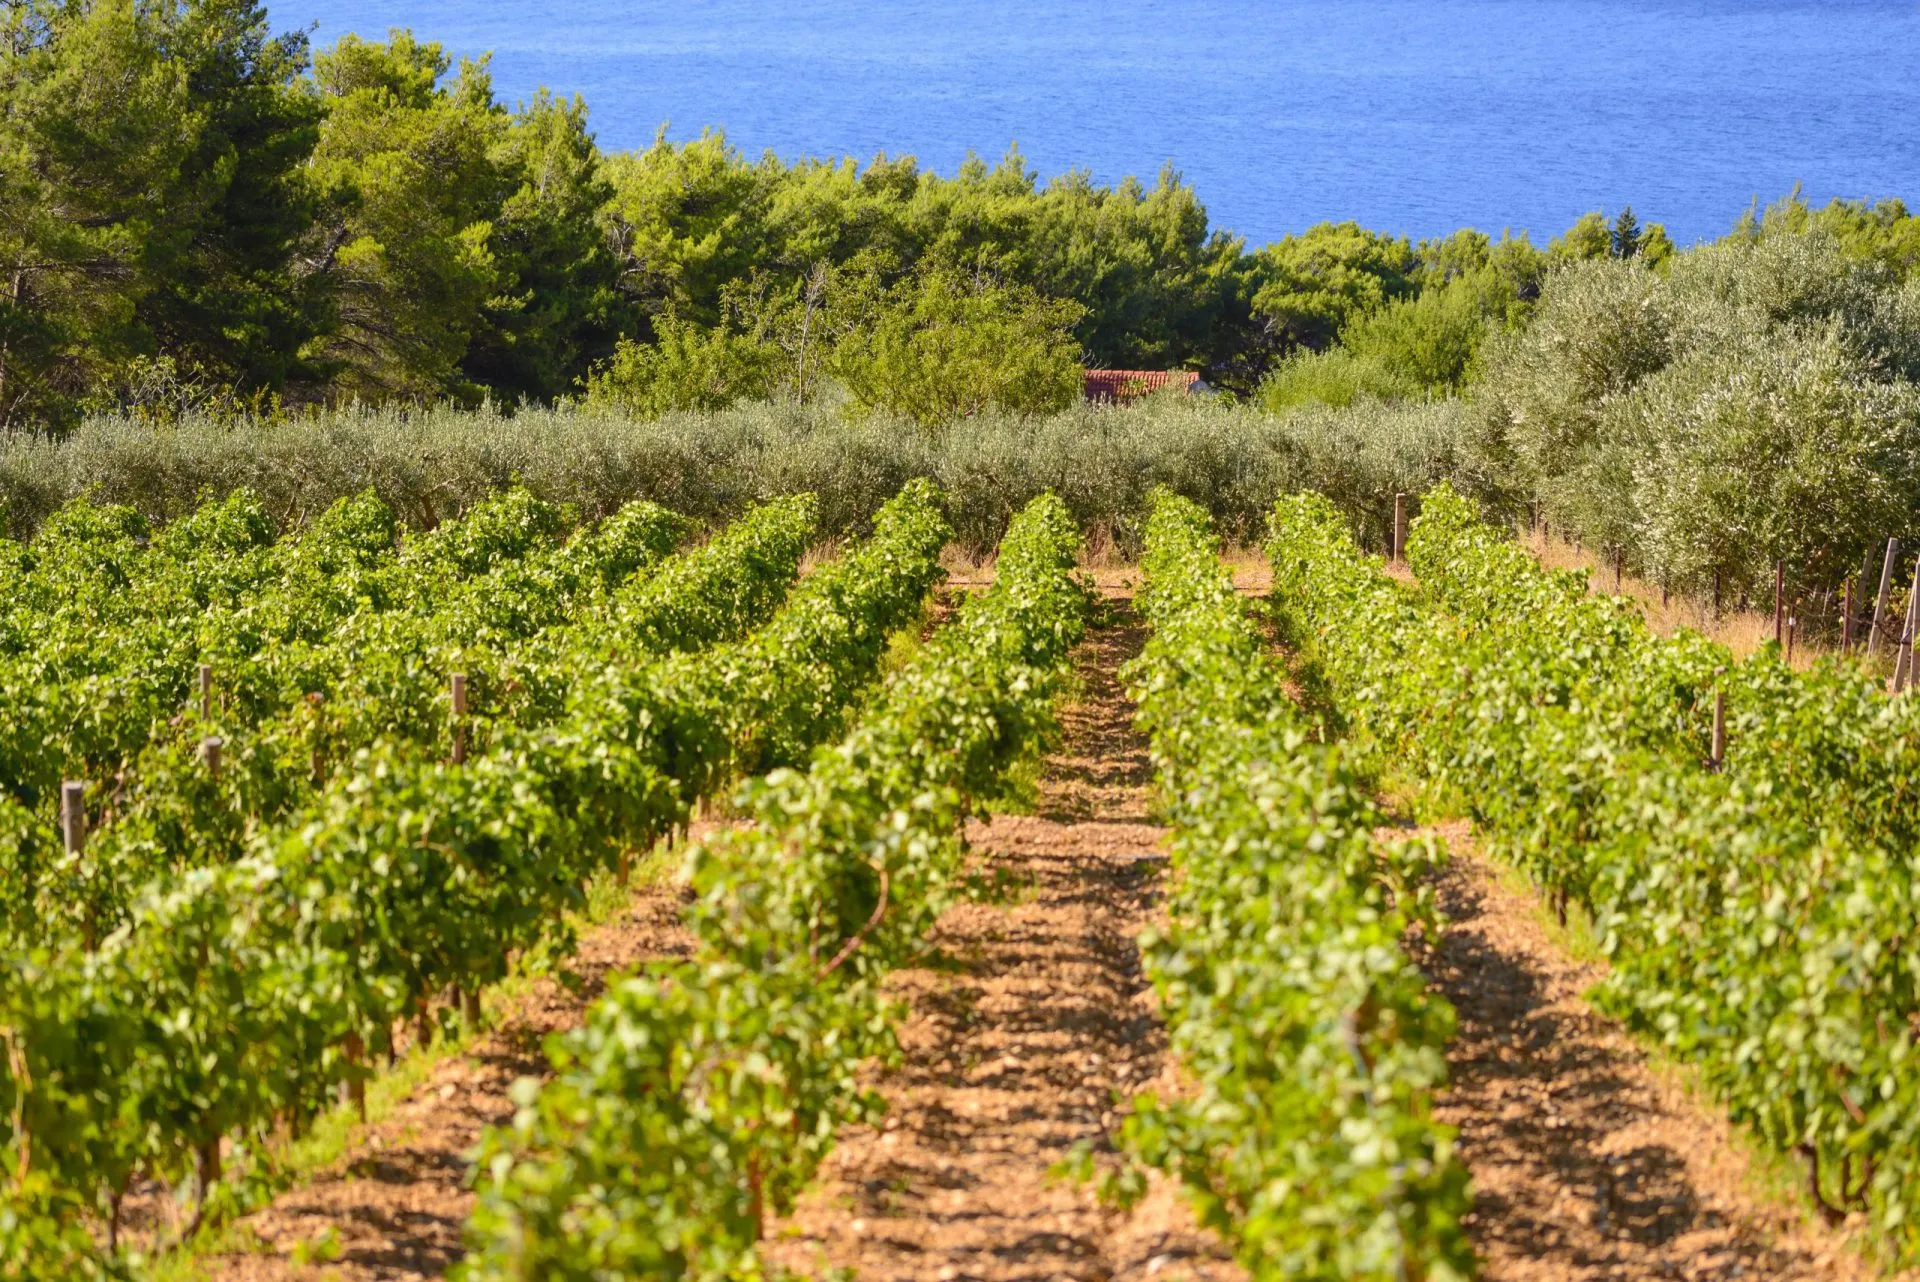 Korcula olives and vineyards scaled